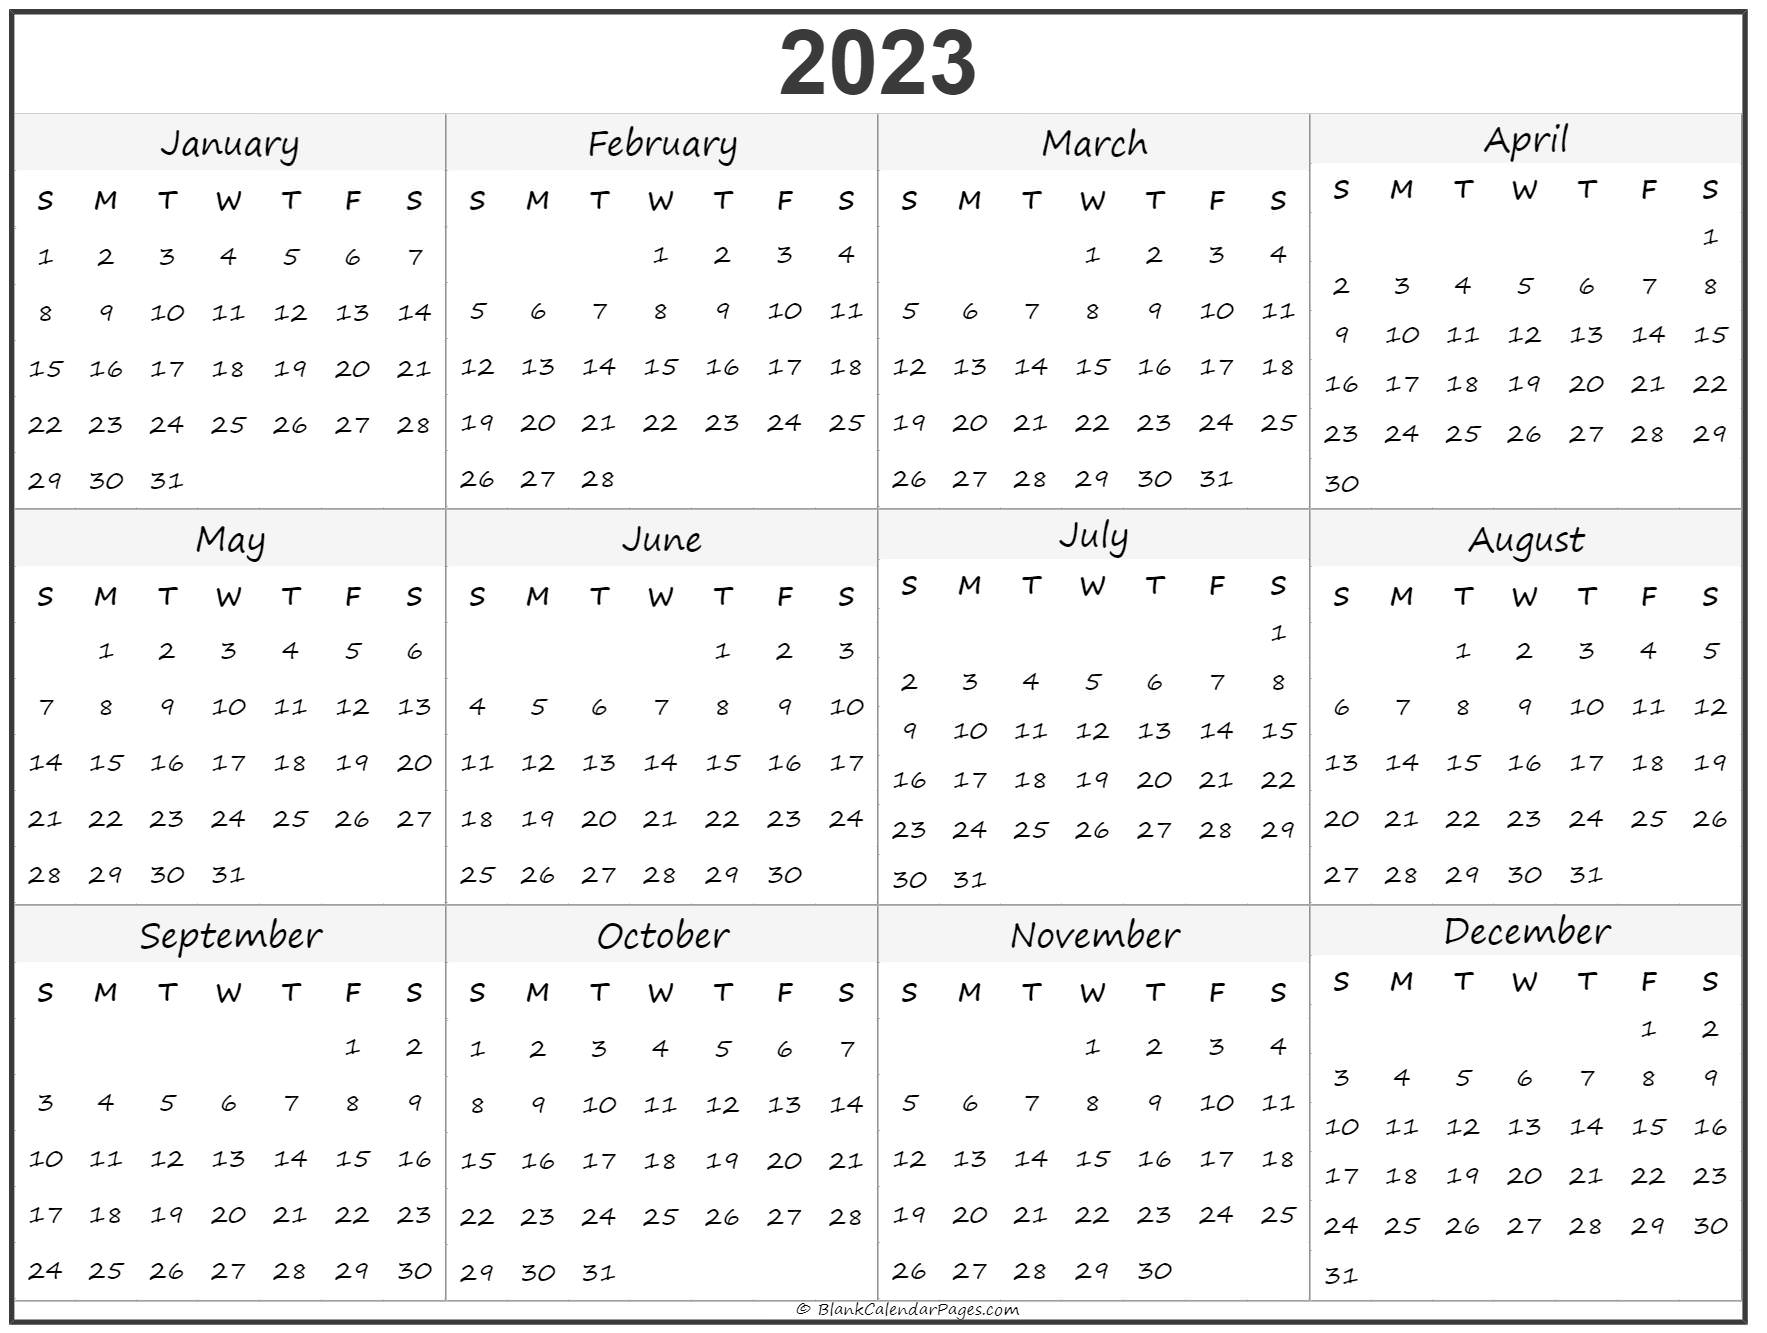 2023-calendar-templates-and-images-2023-calendar-pdf-word-excel-2023-printable-calendar-for